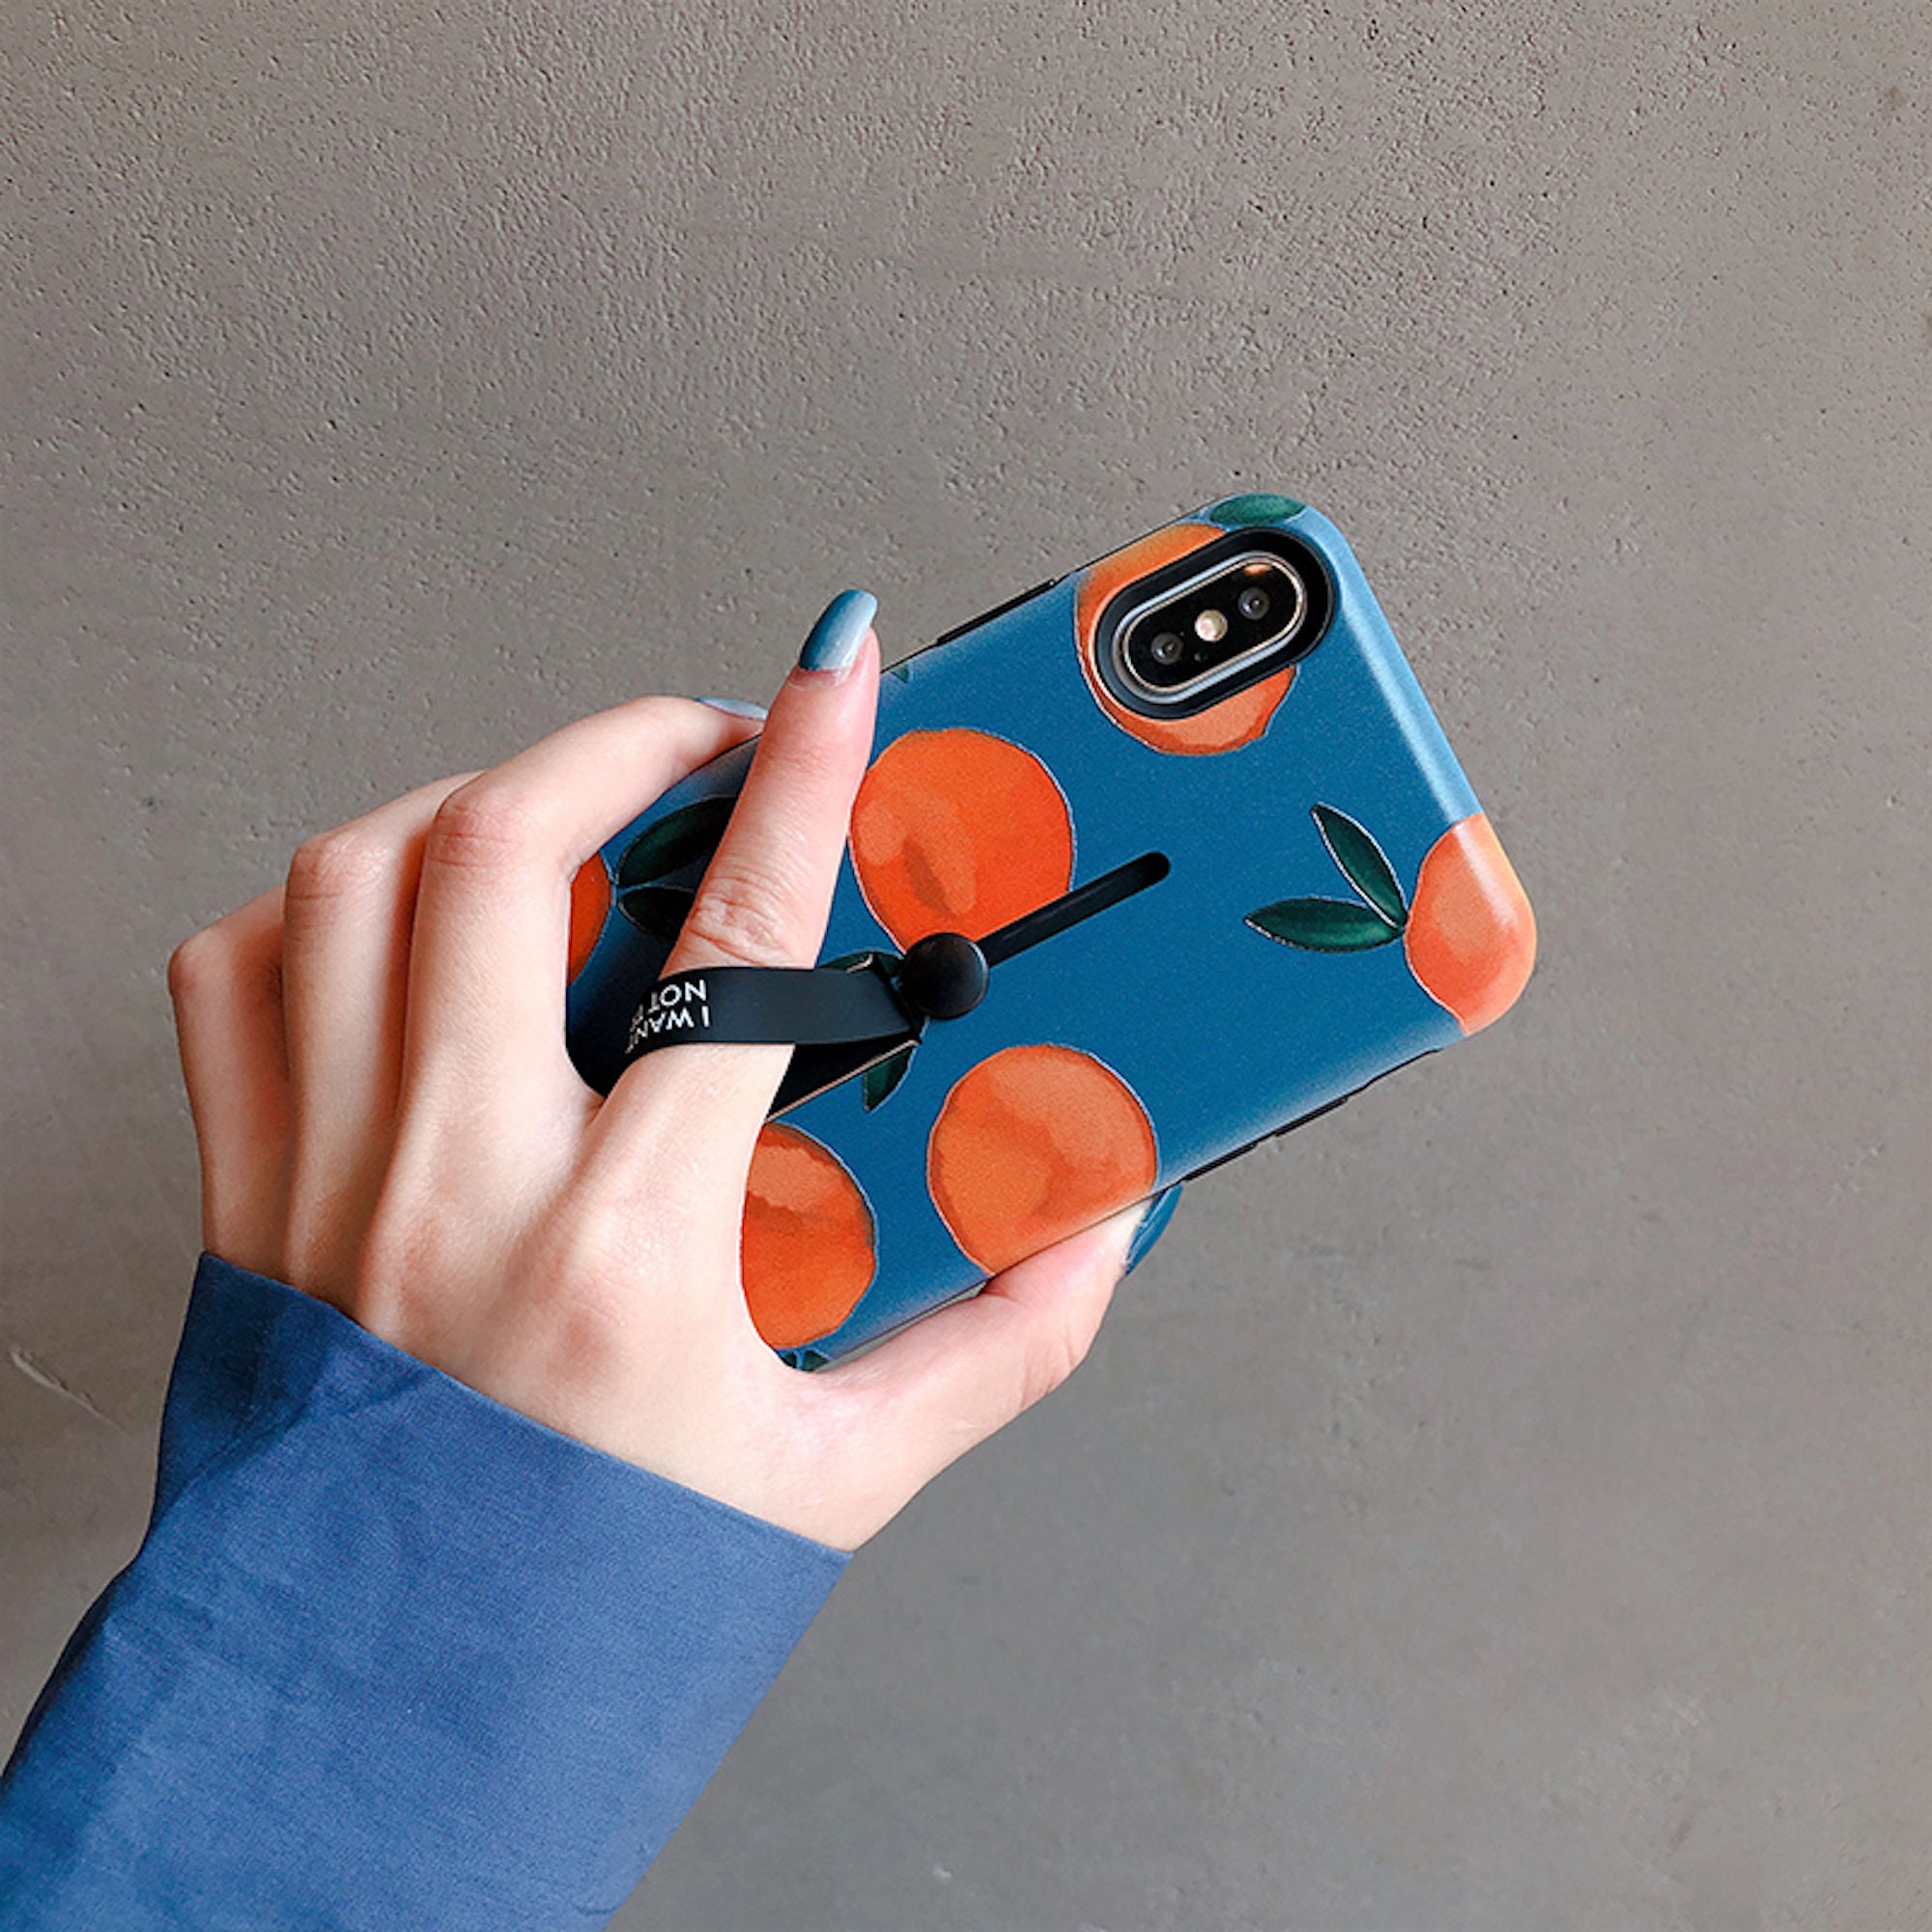 Retro orange painting loop finger grip phone case with back | Etsy